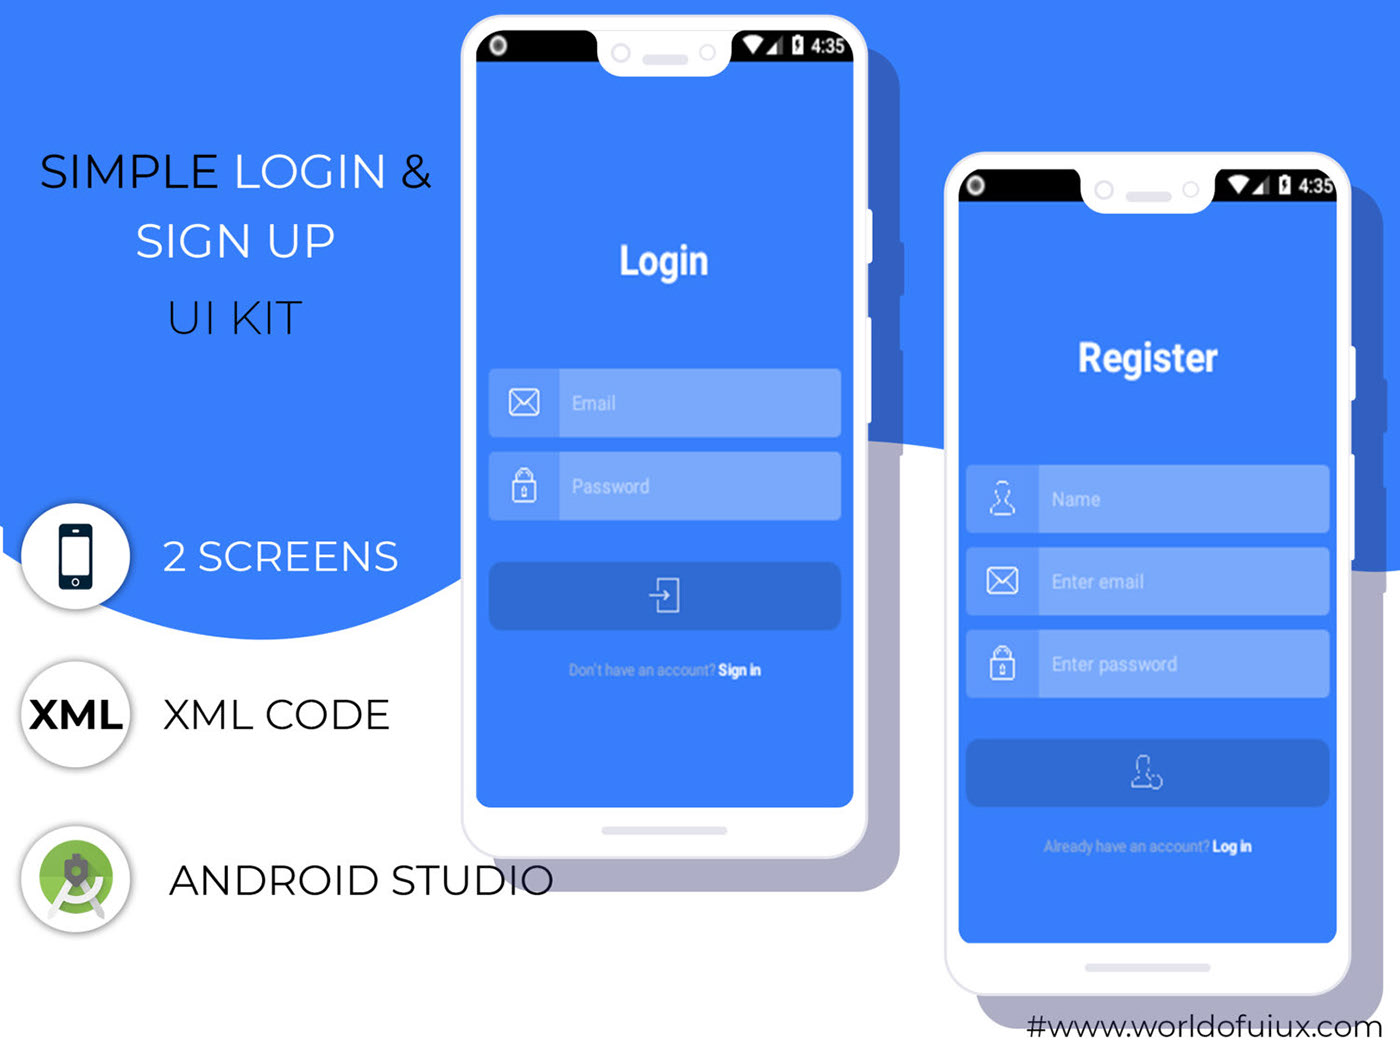 Simple Login & Sign Up UI Kit